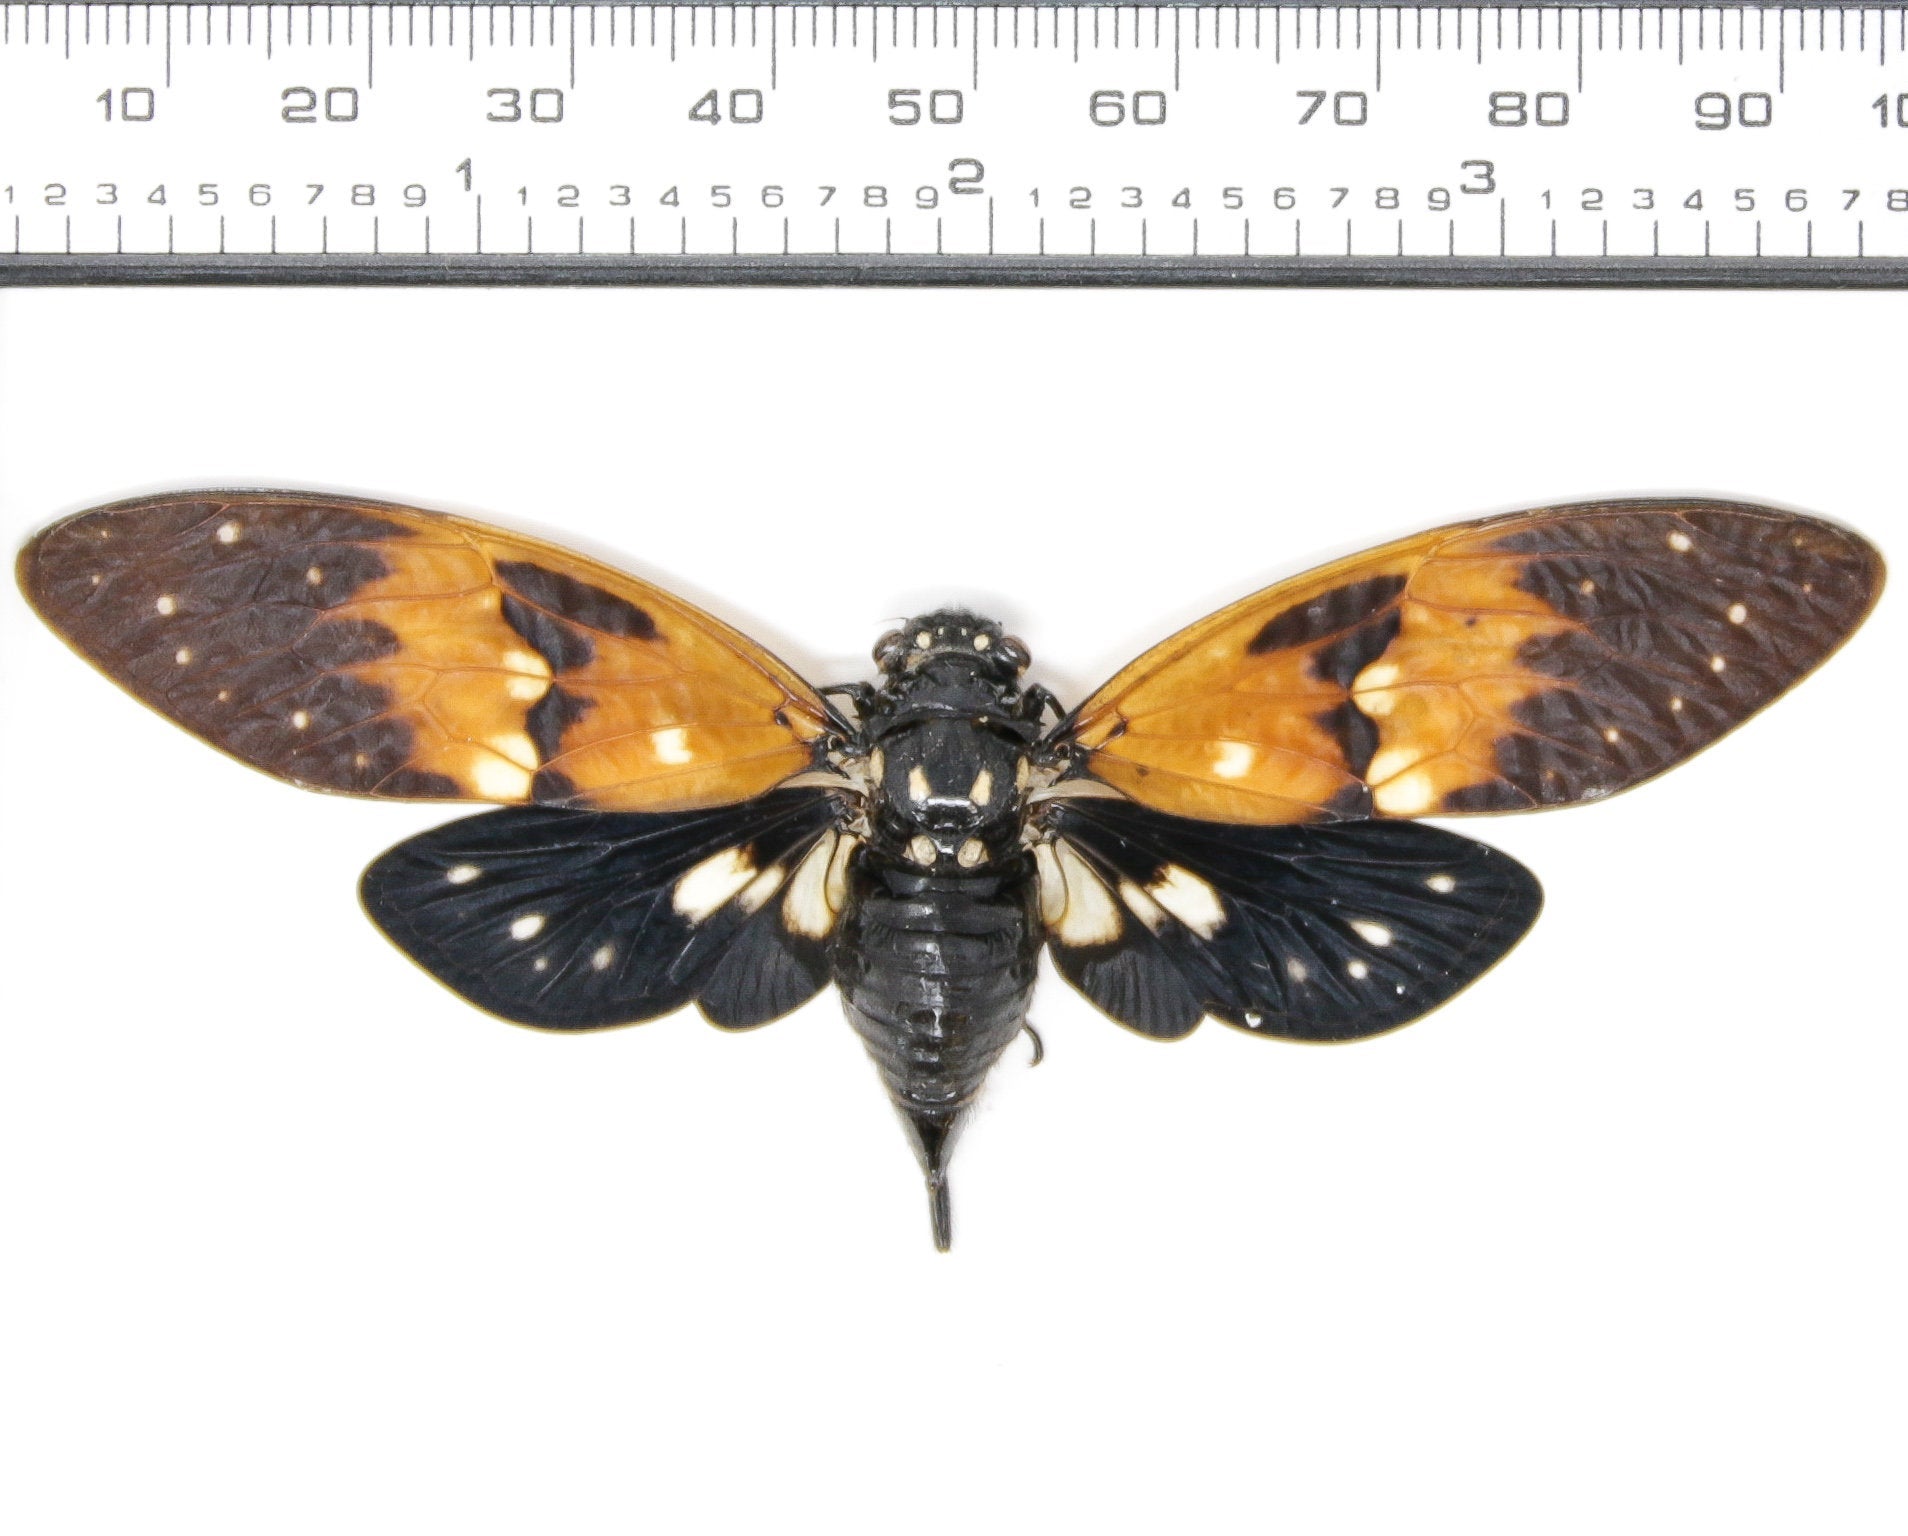 Two (2) Amber Cicada (Ambragaeana ambra) Unmounted Hemiptera Specimens for Collecting Art Entomology